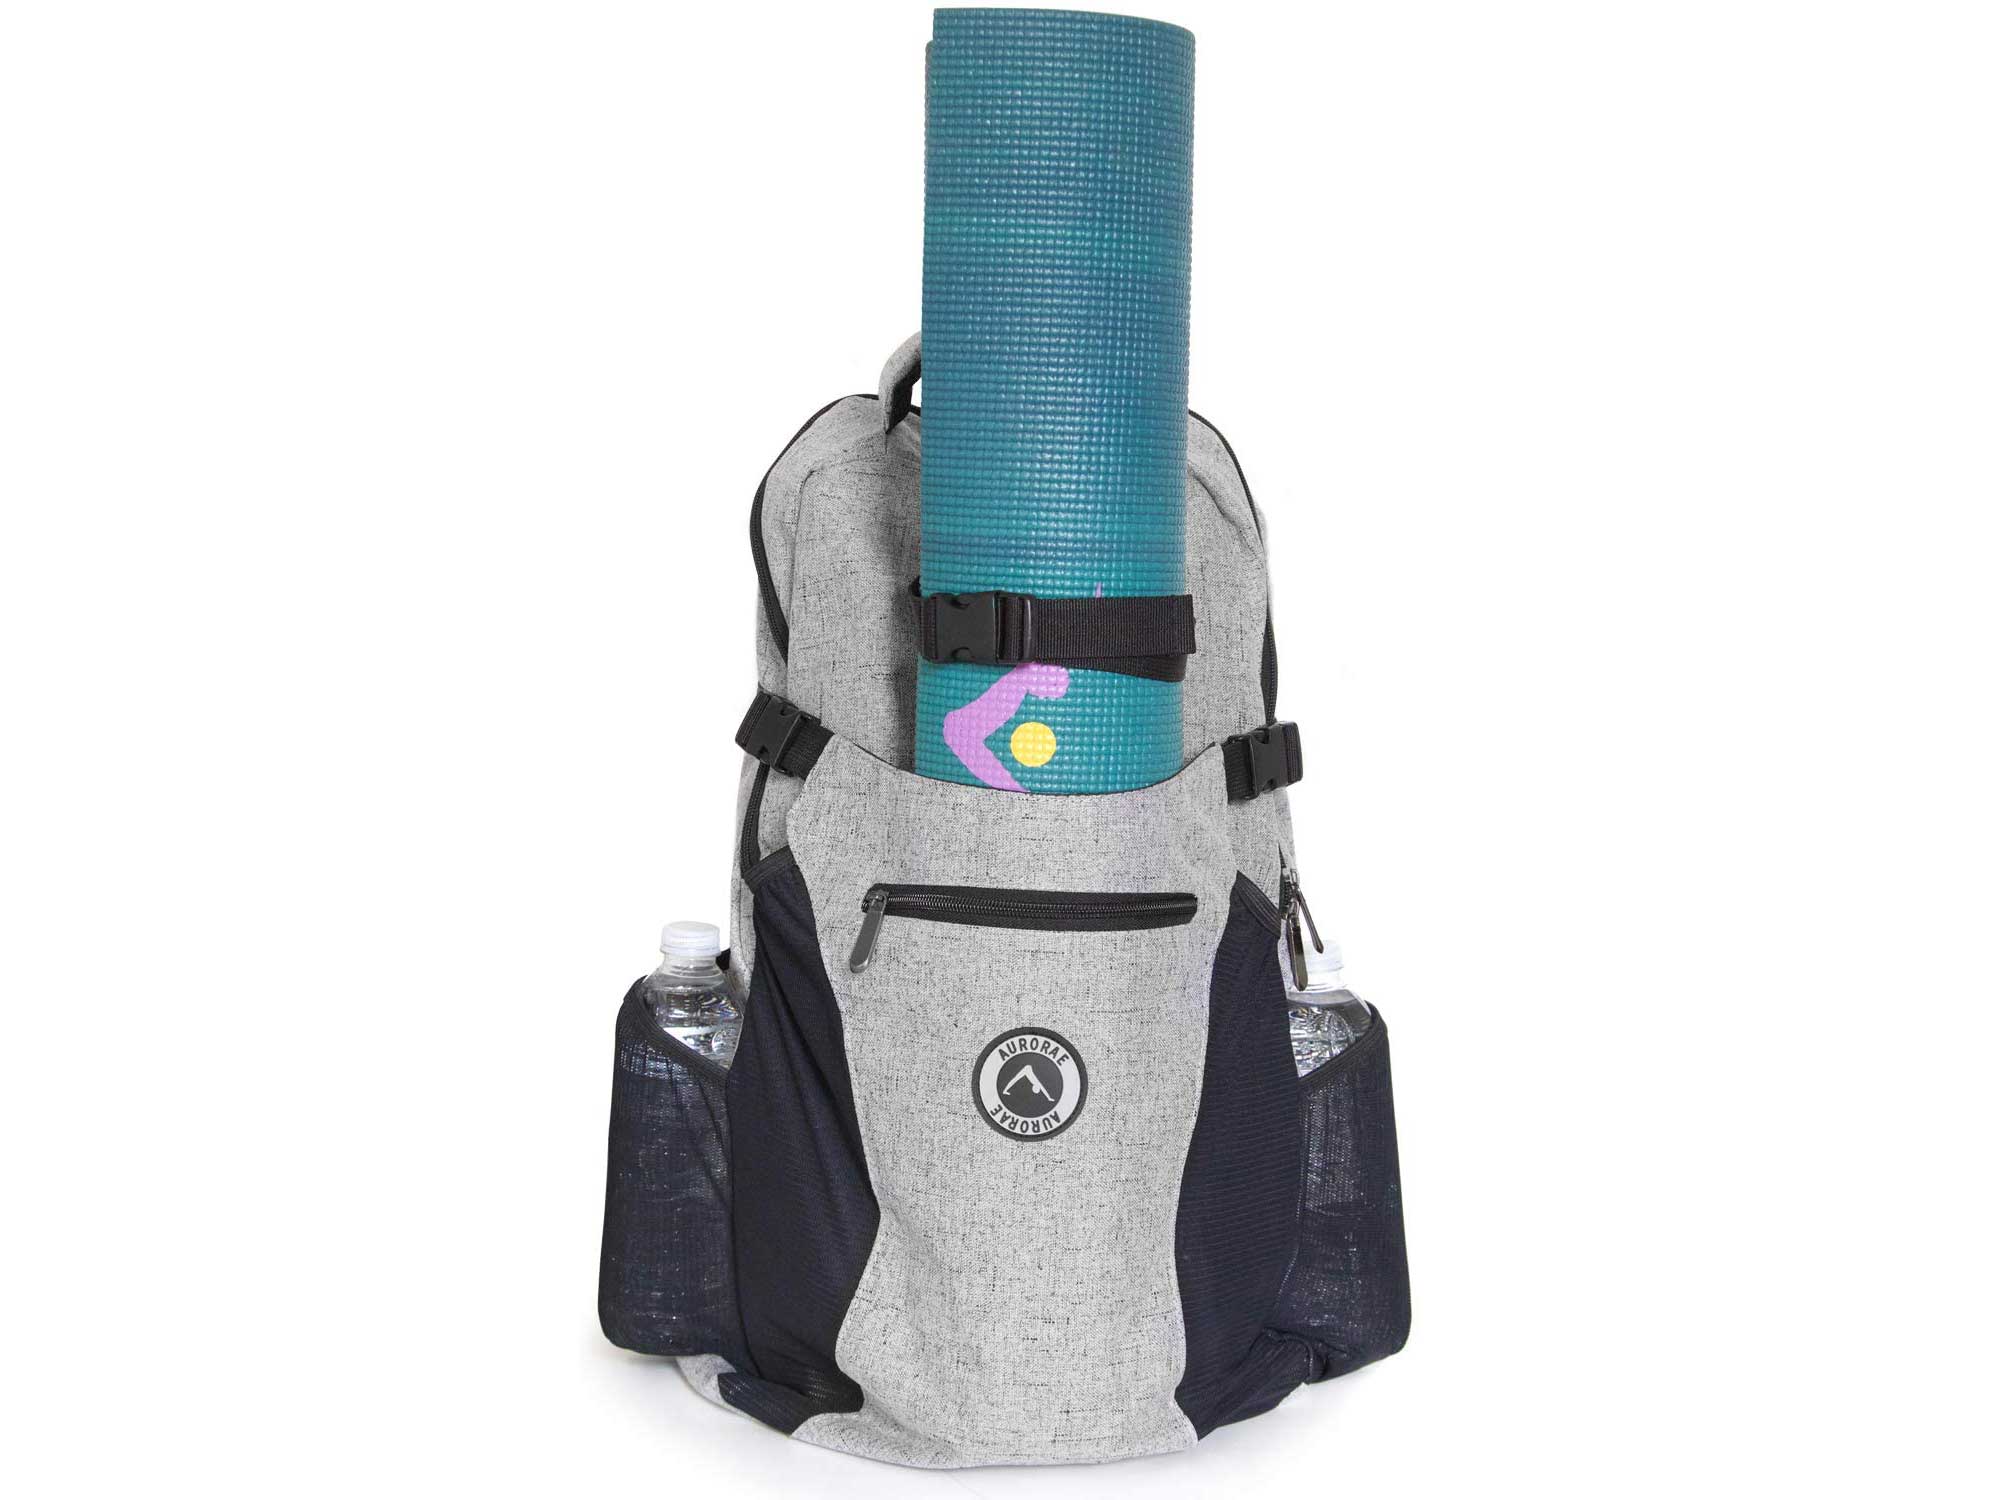 Aurorae Yoga Multi-Purpose Backpack